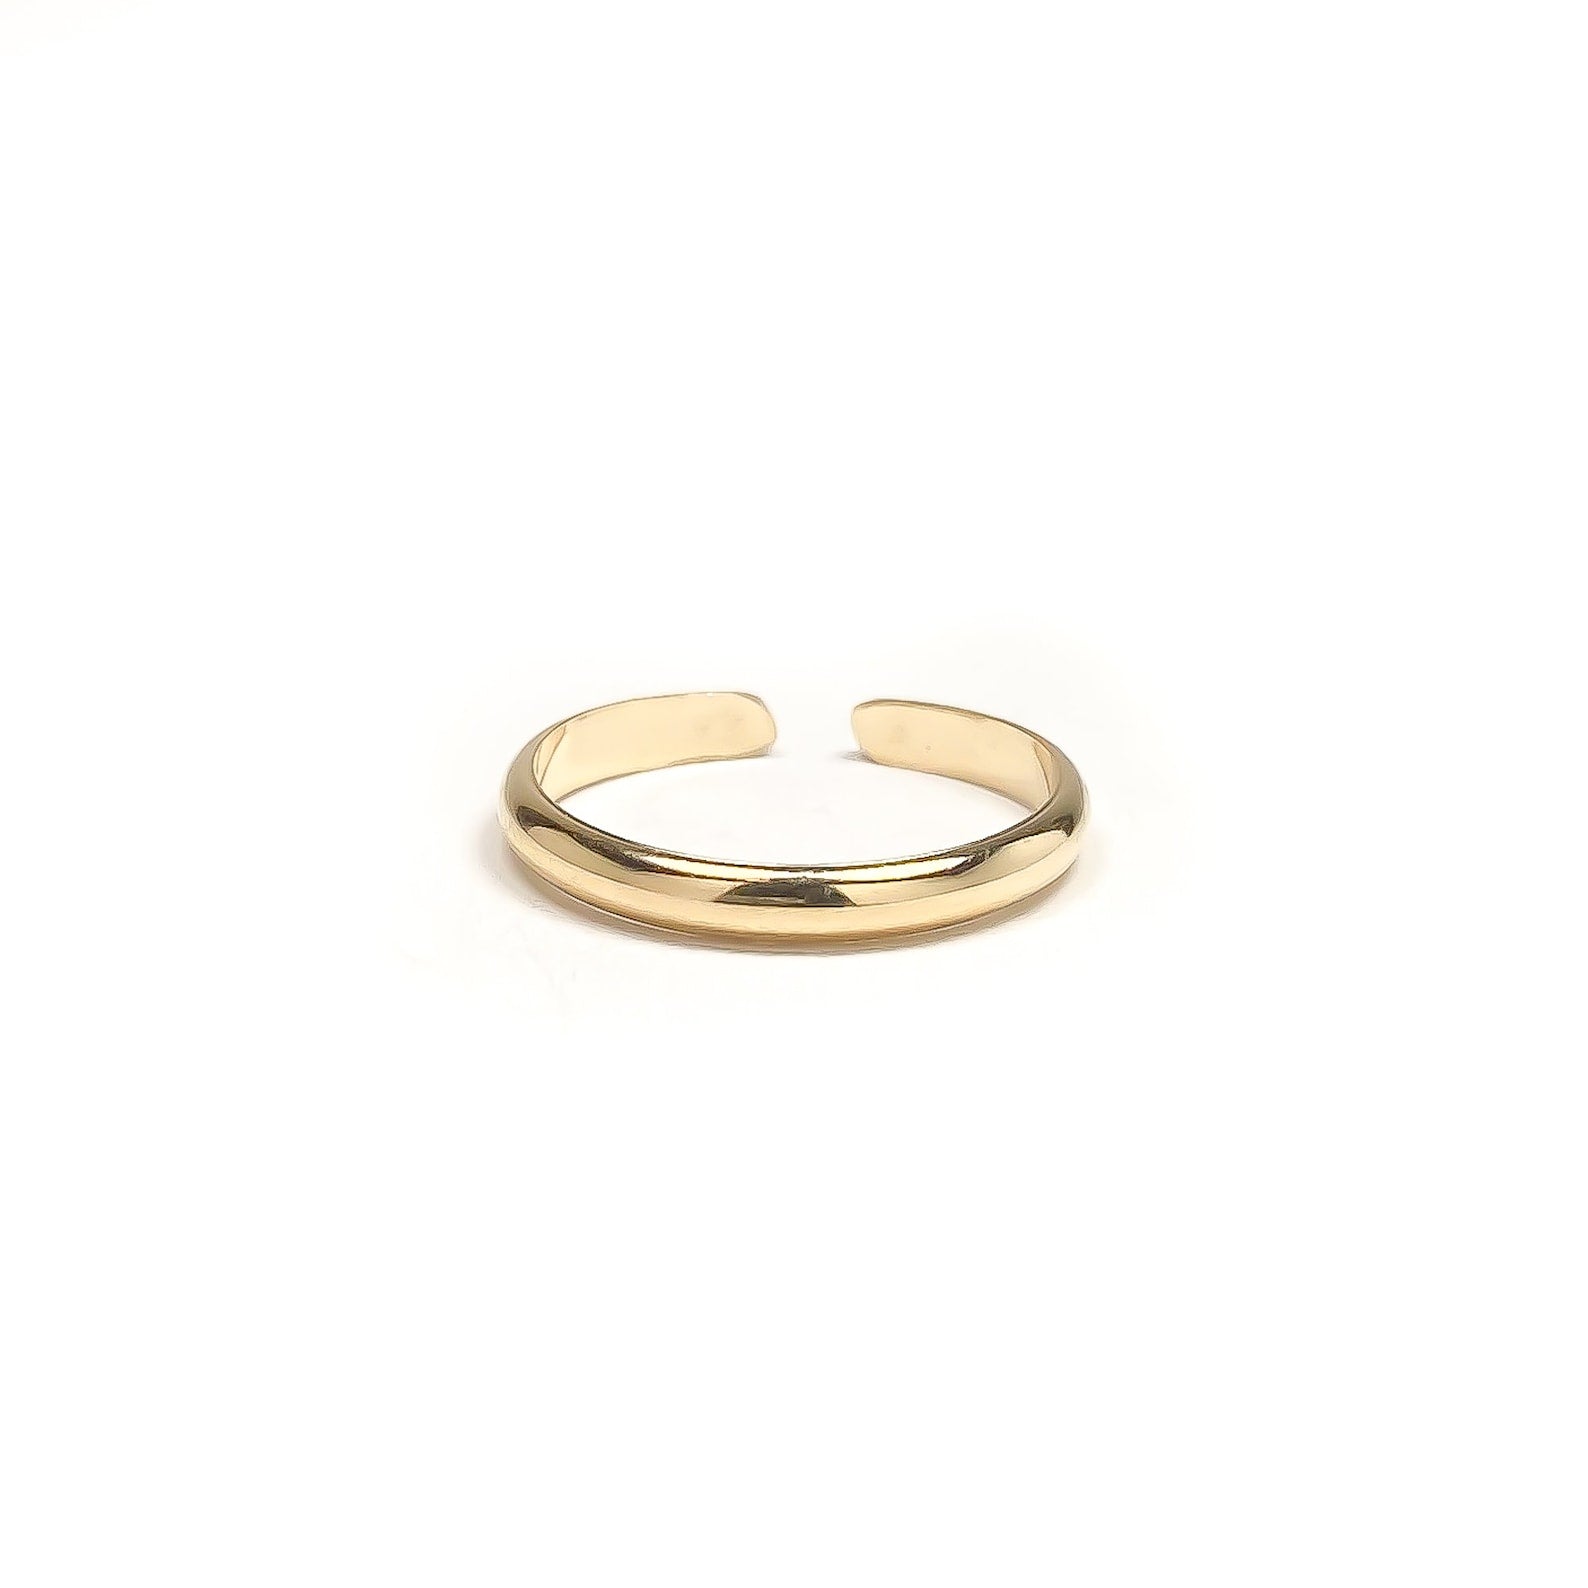 Gold toe-rings - ABDESIGNS - 3113789